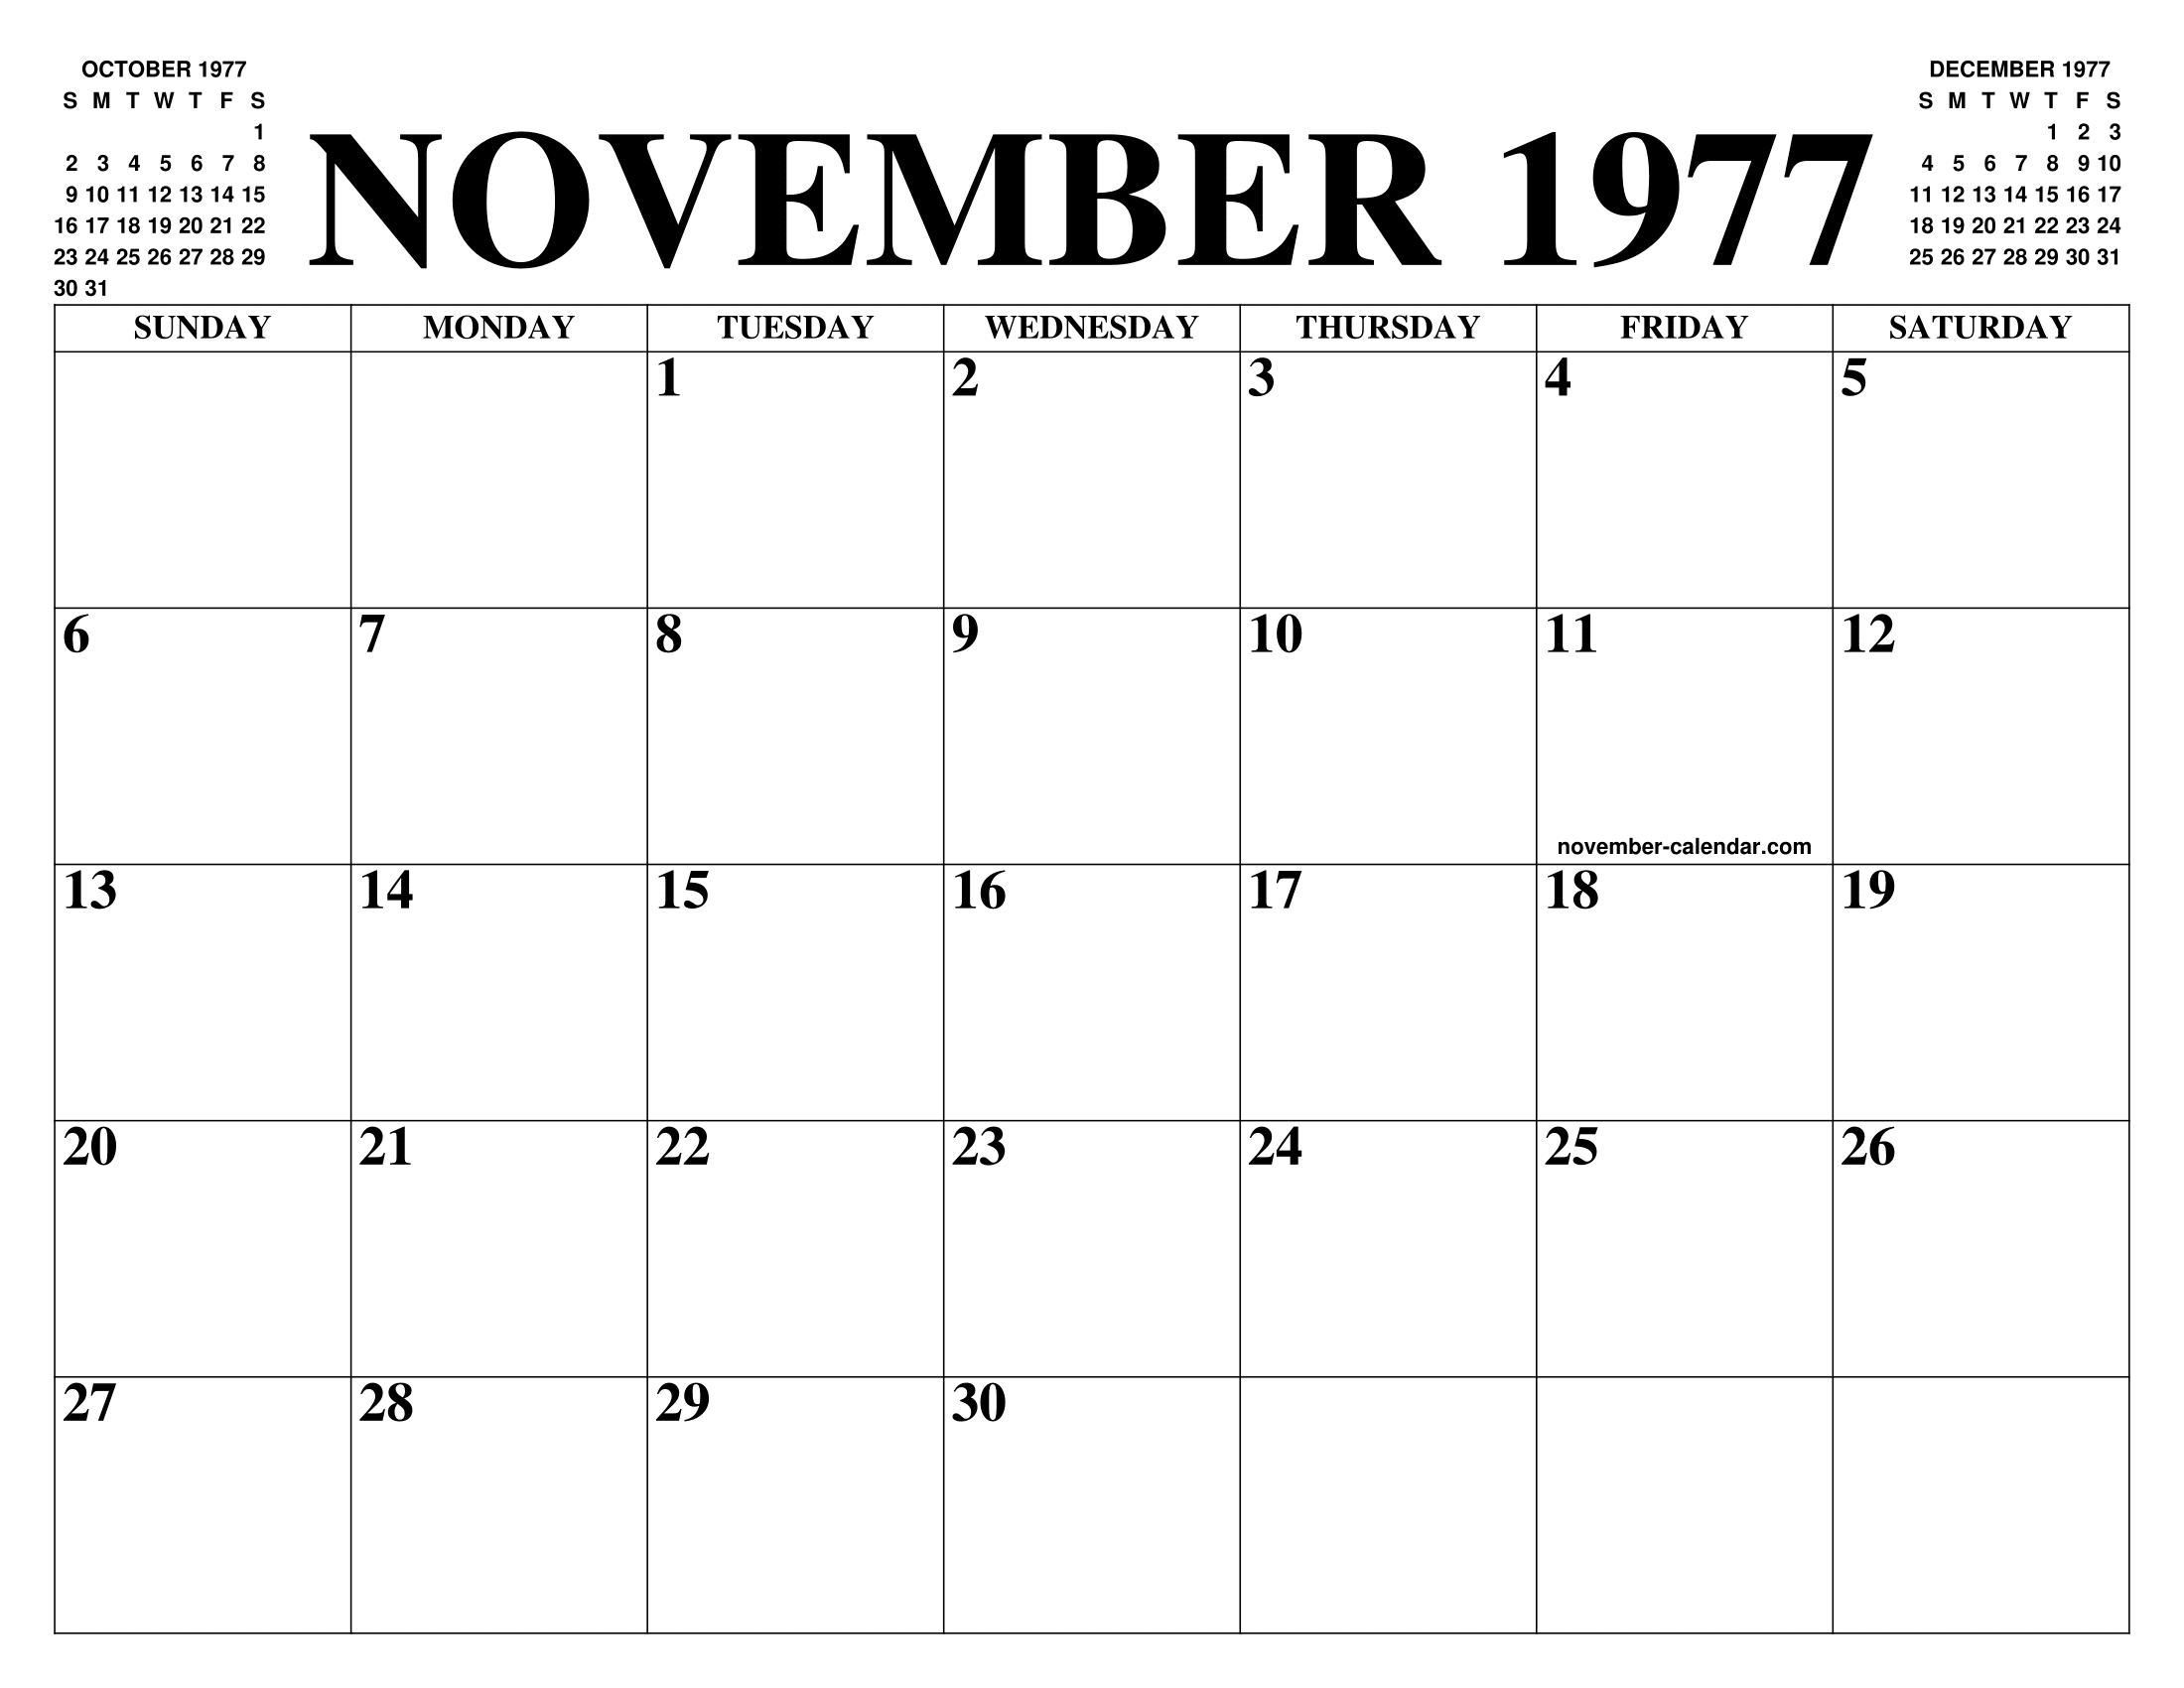 NOVEMBER 1977 CALENDAR OF THE MONTH: FREE PRINTABLE NOVEMBER CALENDAR